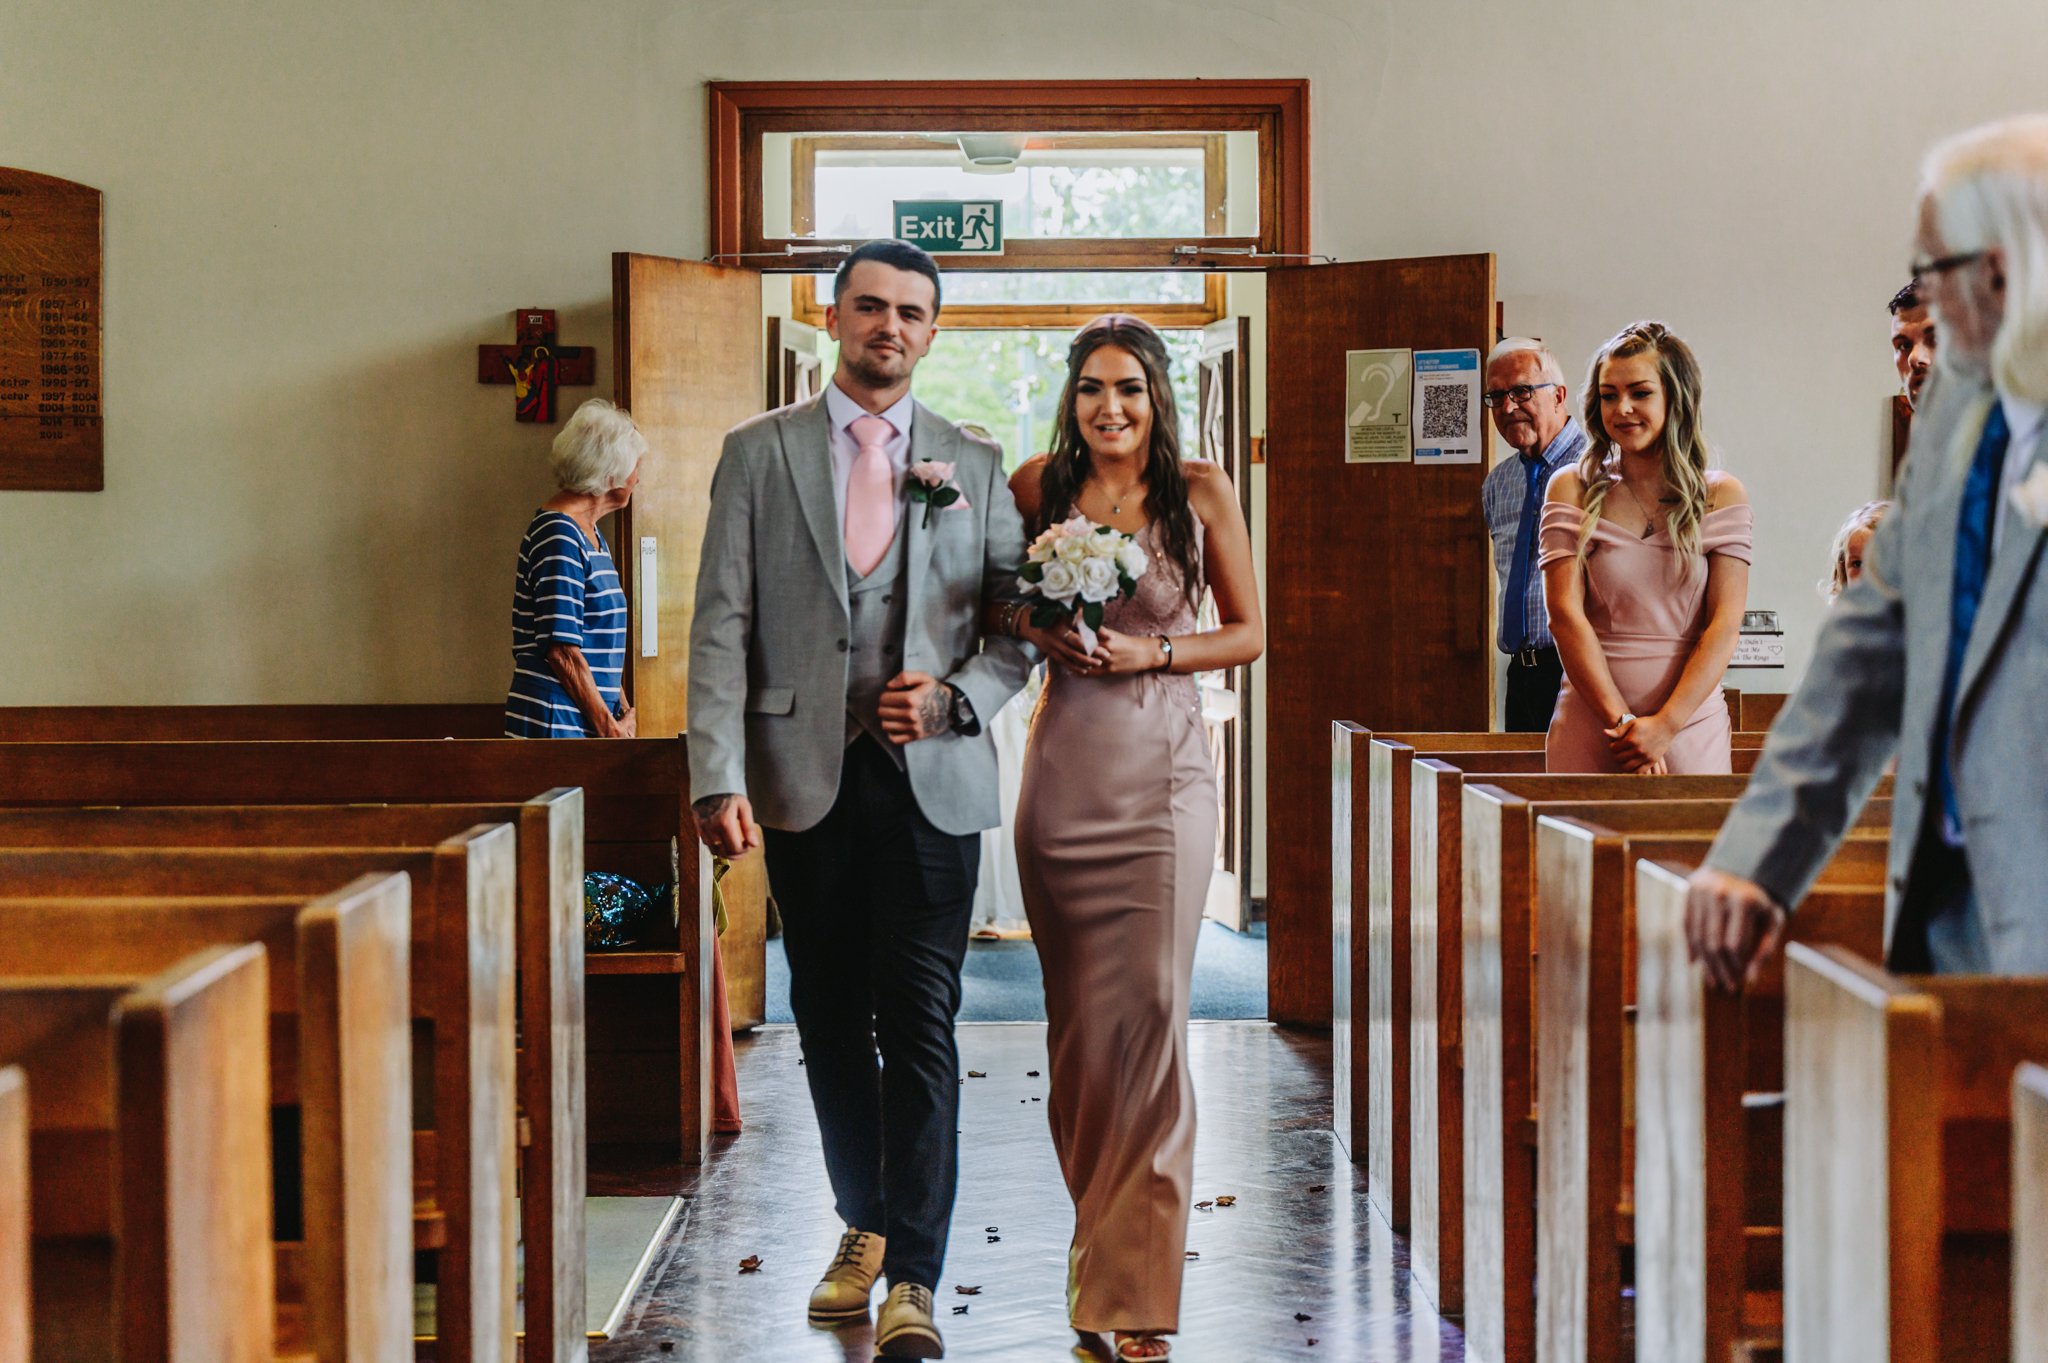 Saint-Clares-Church-Newton-Aycliffe-wedding-photograper (1 of 13).jpg